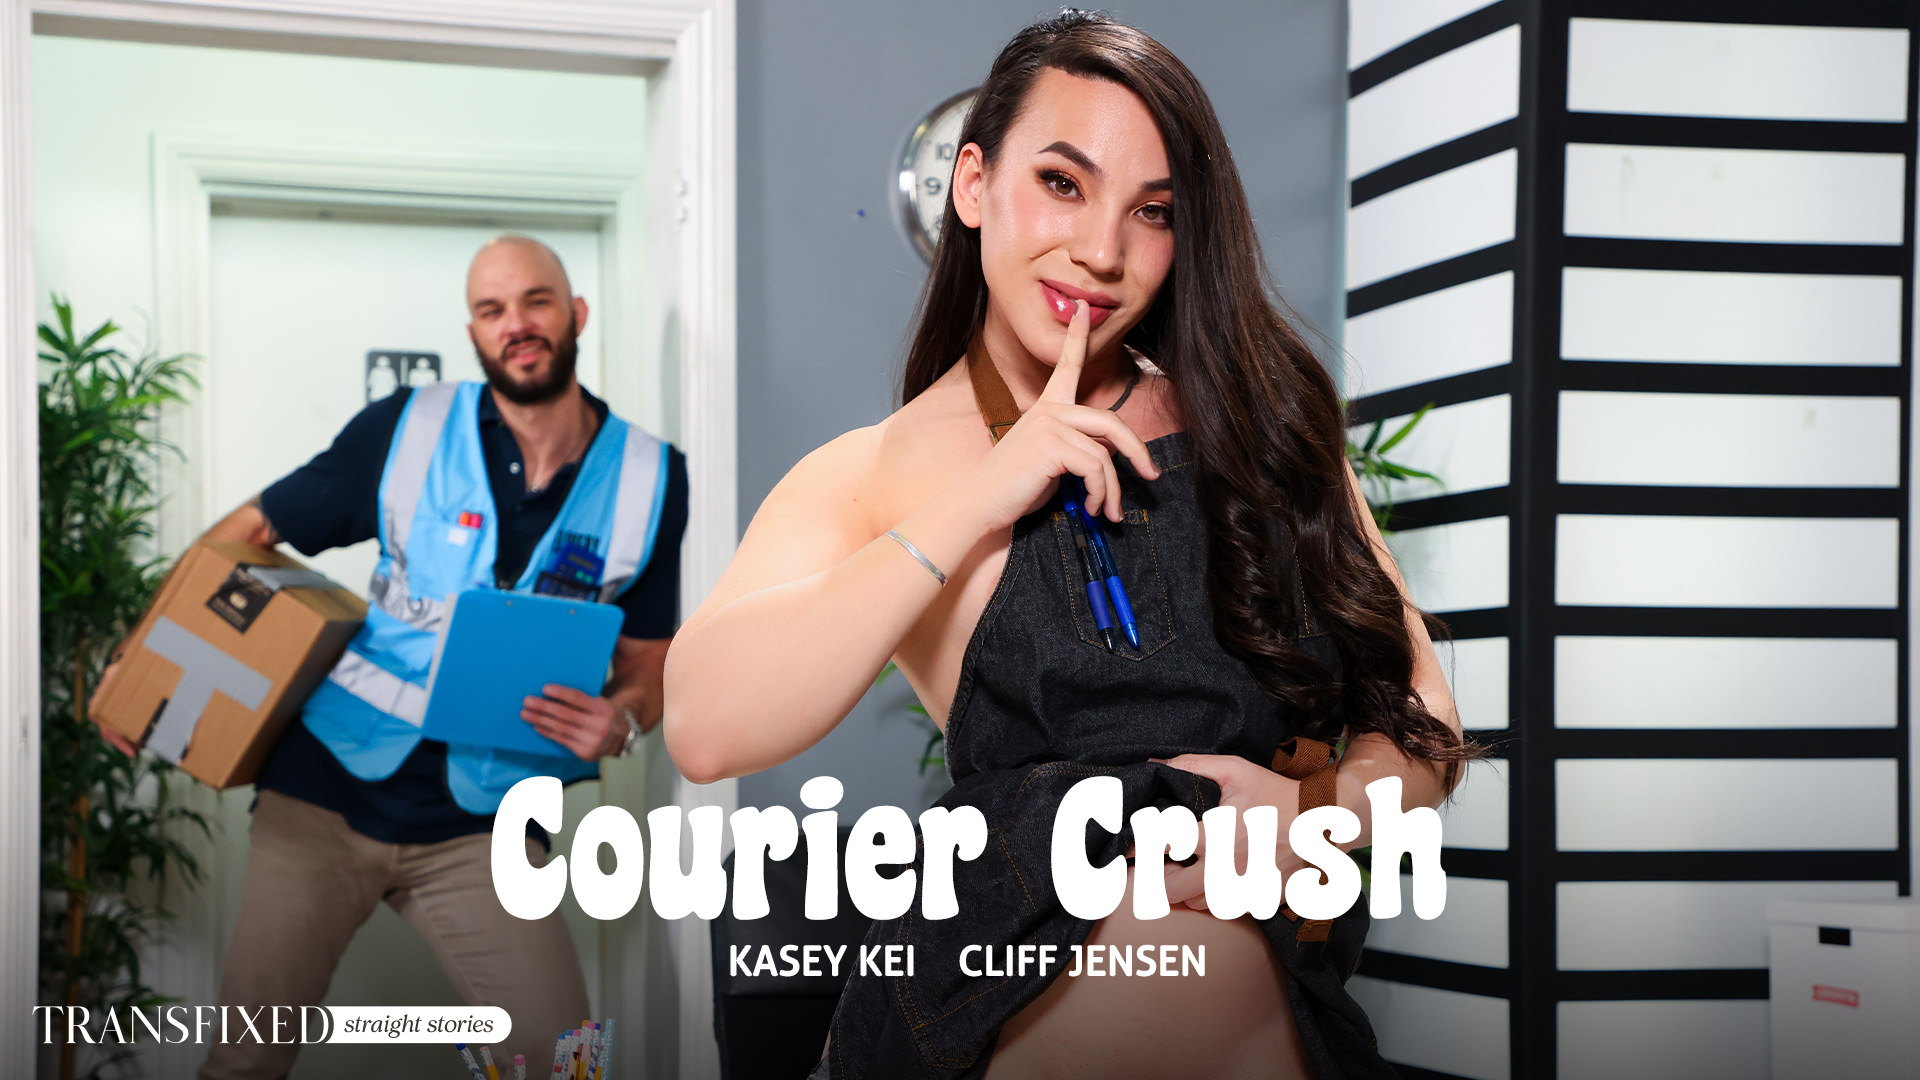 Cliff Jensen, Kasey Kei “Courier Crush” Transfixed